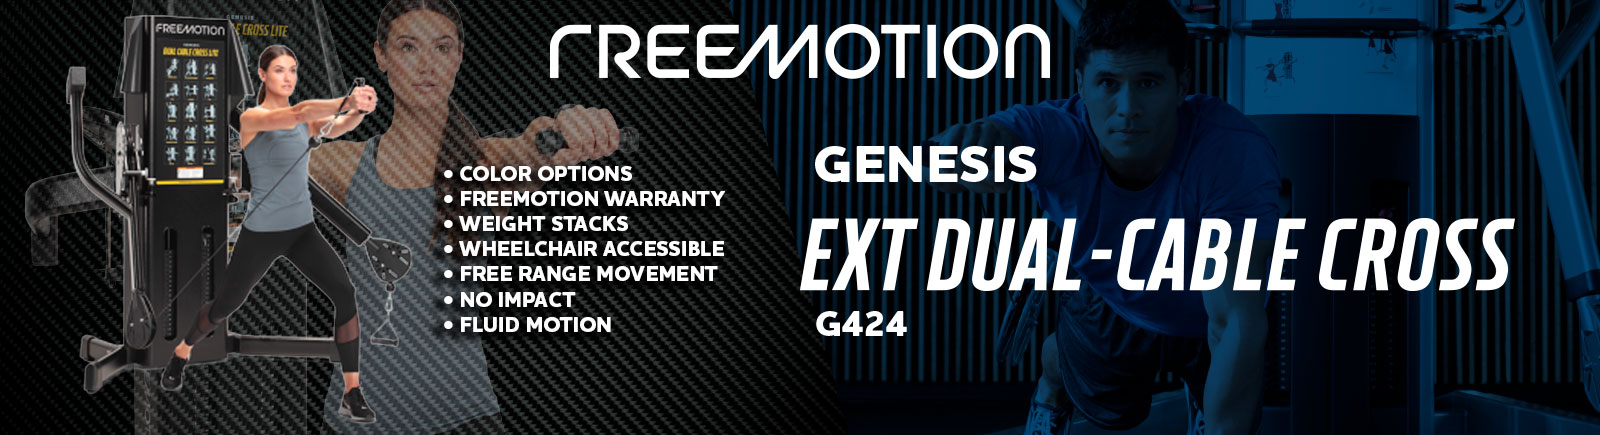 freemotion genesis ext dual